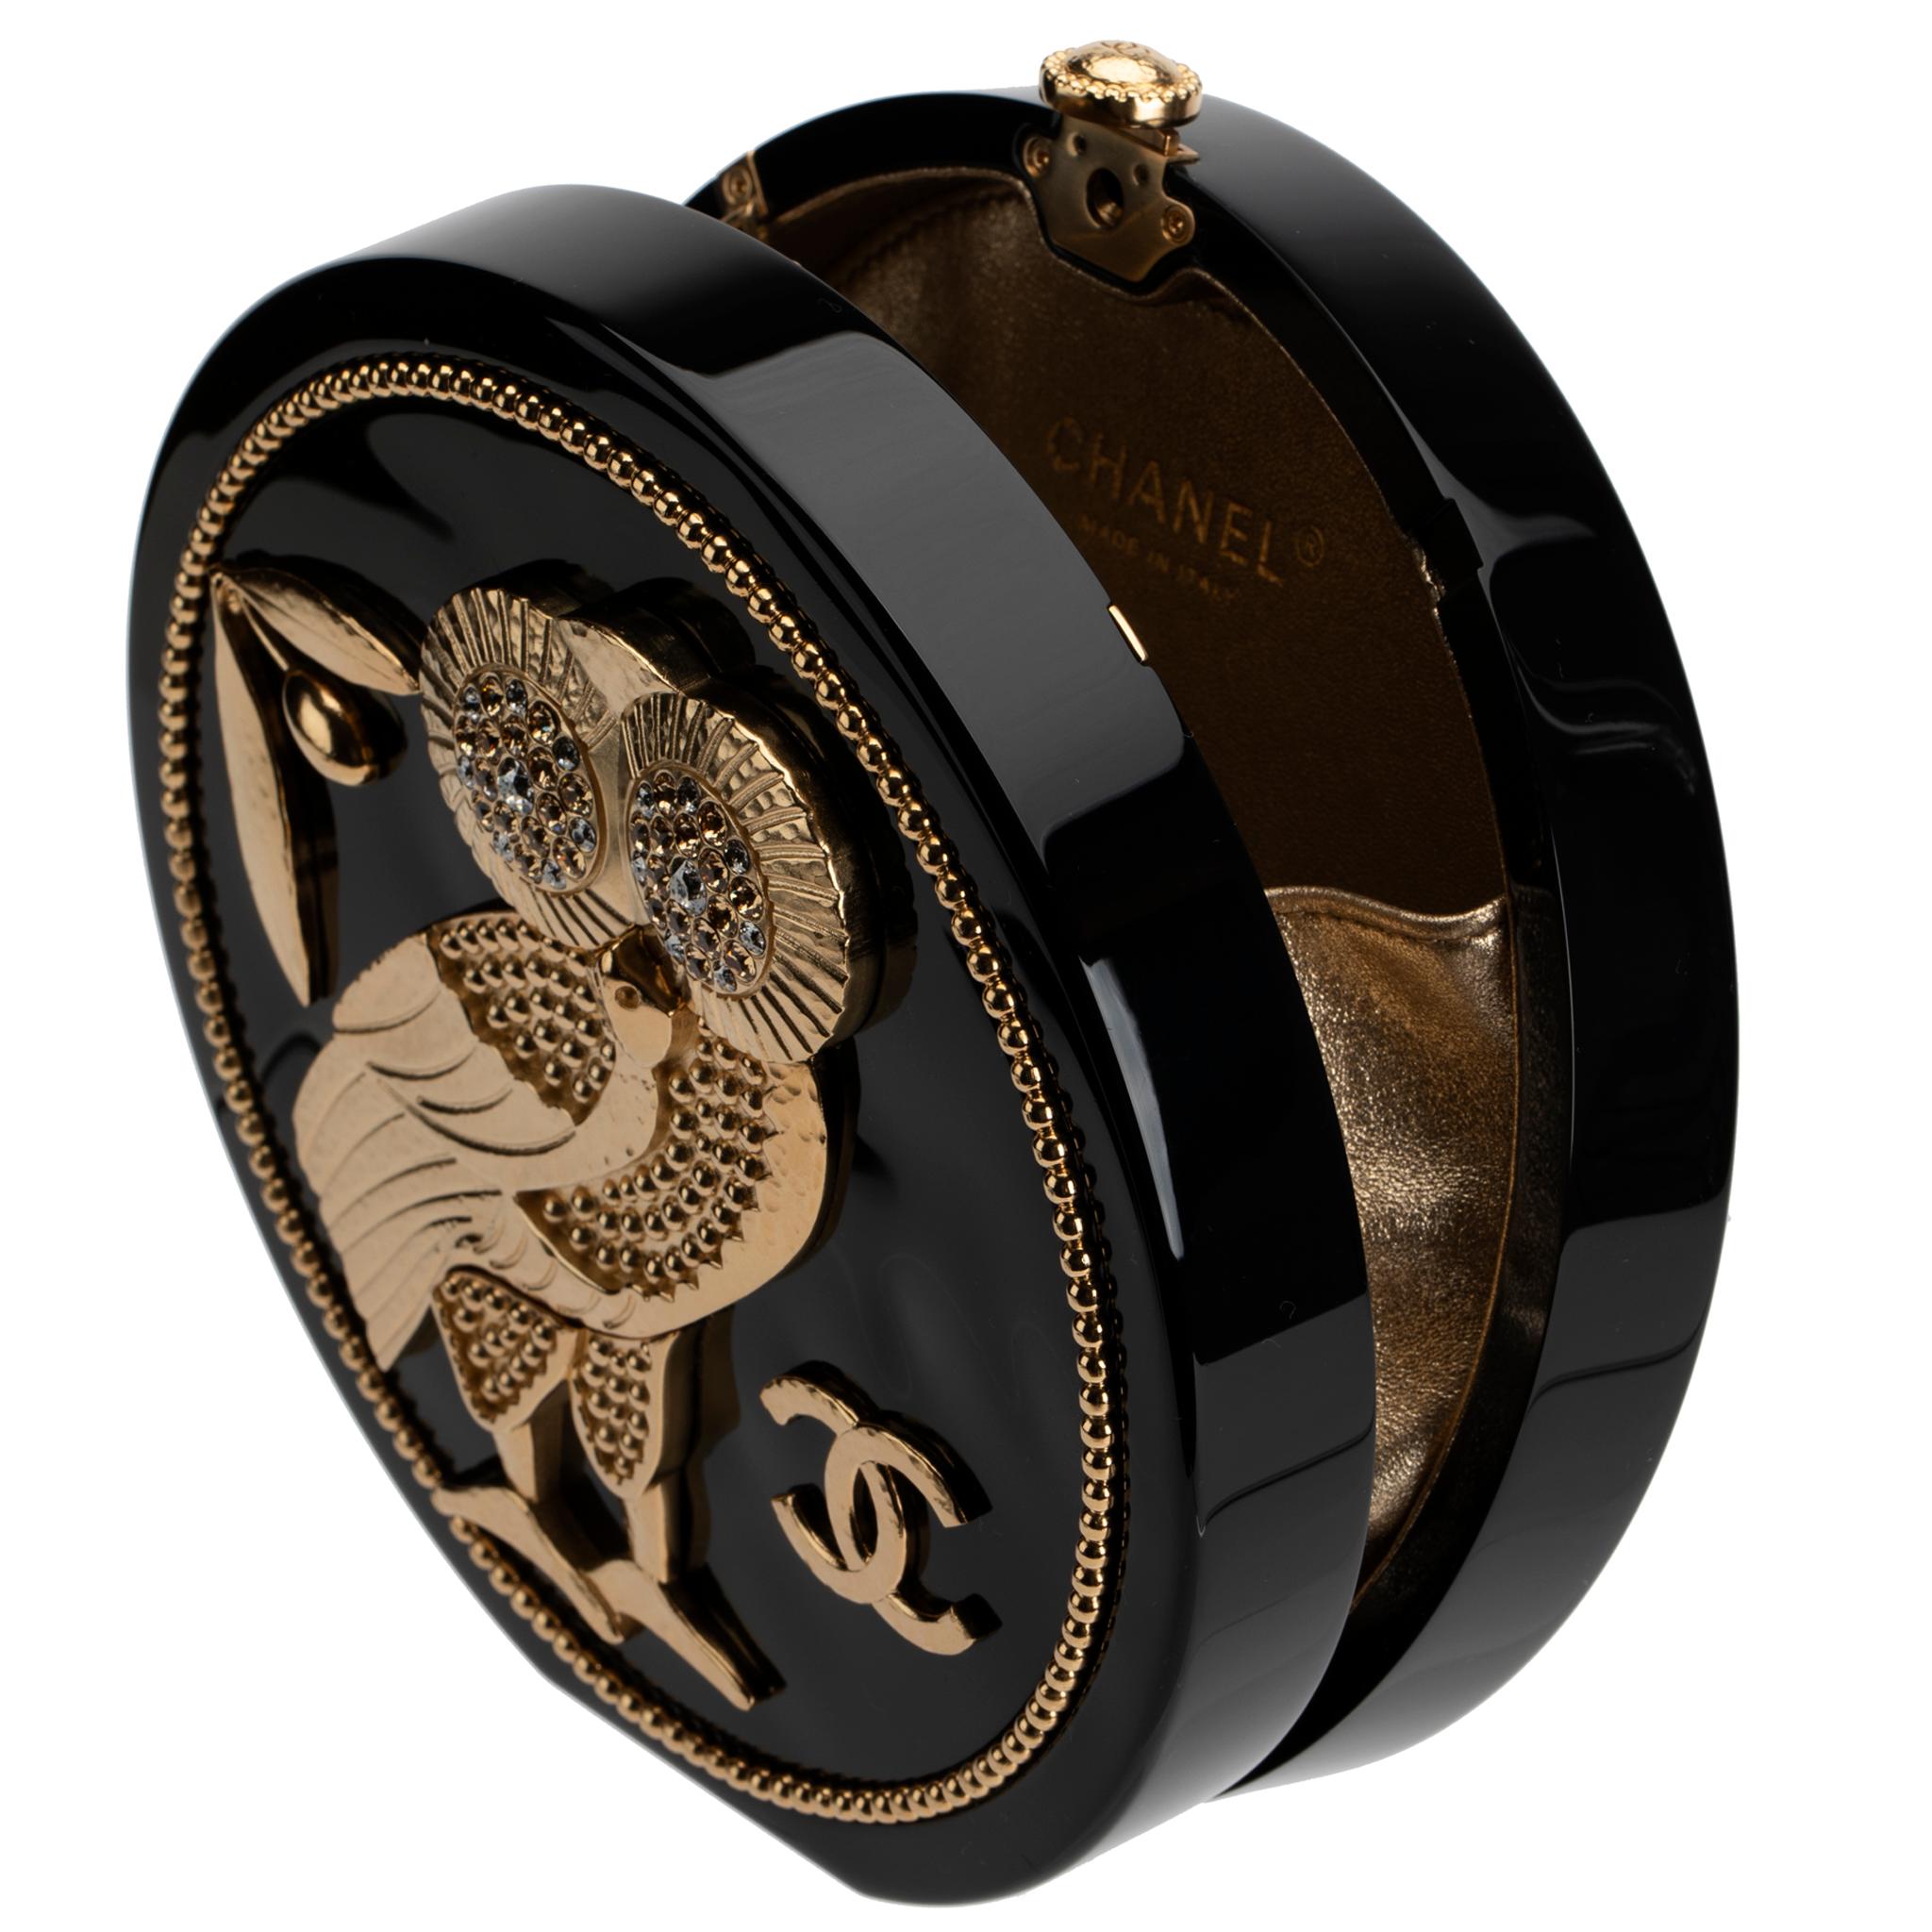 Chanel Minaudière Limited Edition Black Plexiglass & Gold Owl Gold-Tone Hardware 2